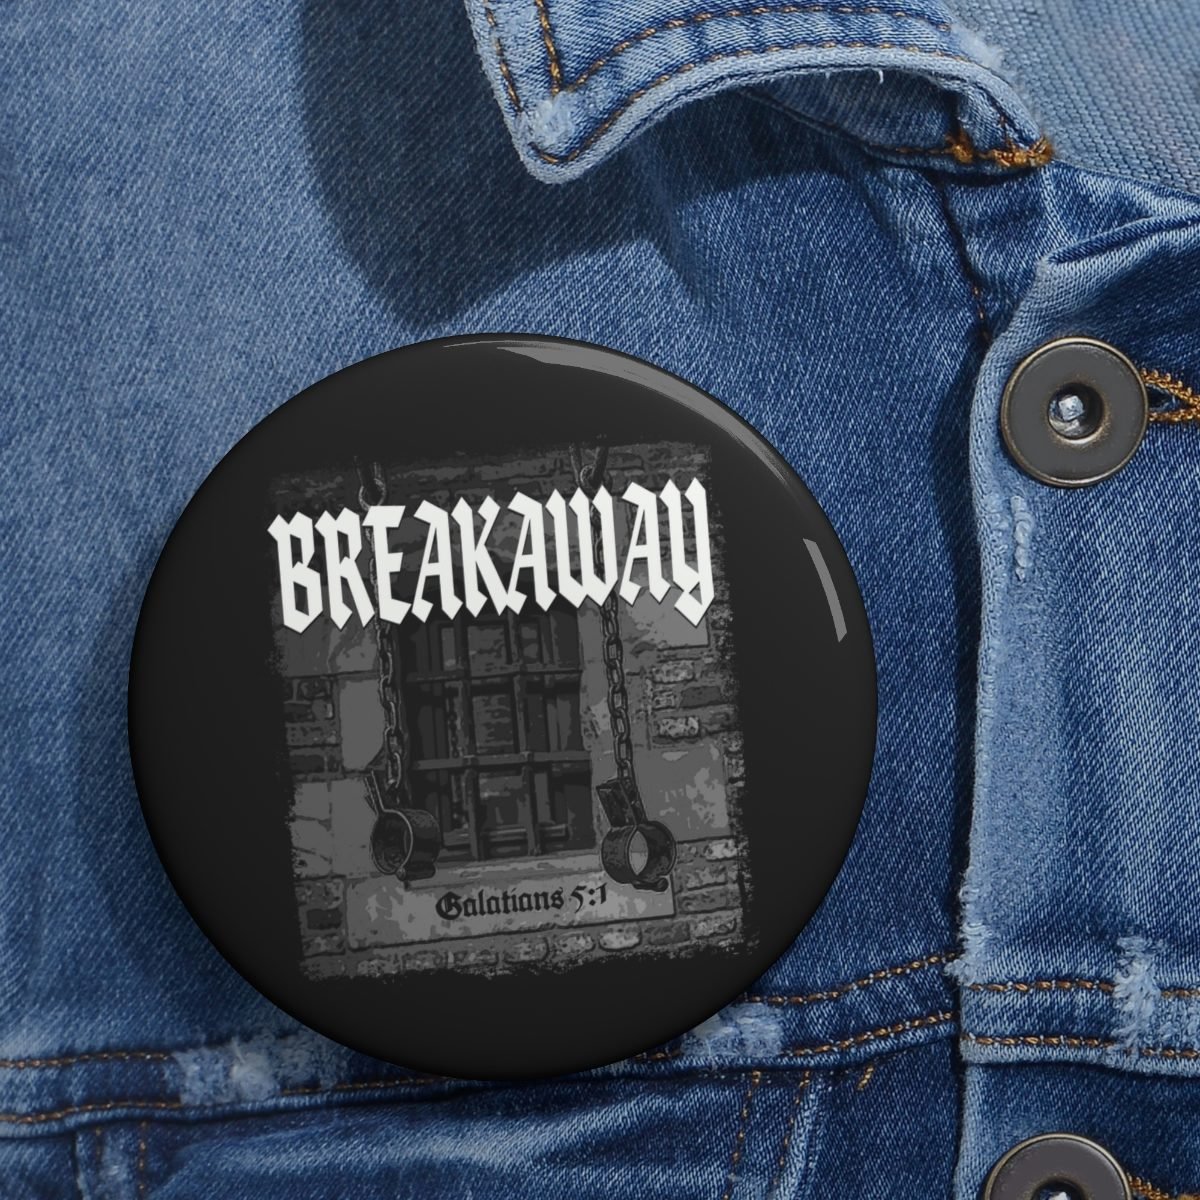 Breakaway – Shackles Black Pin Buttons